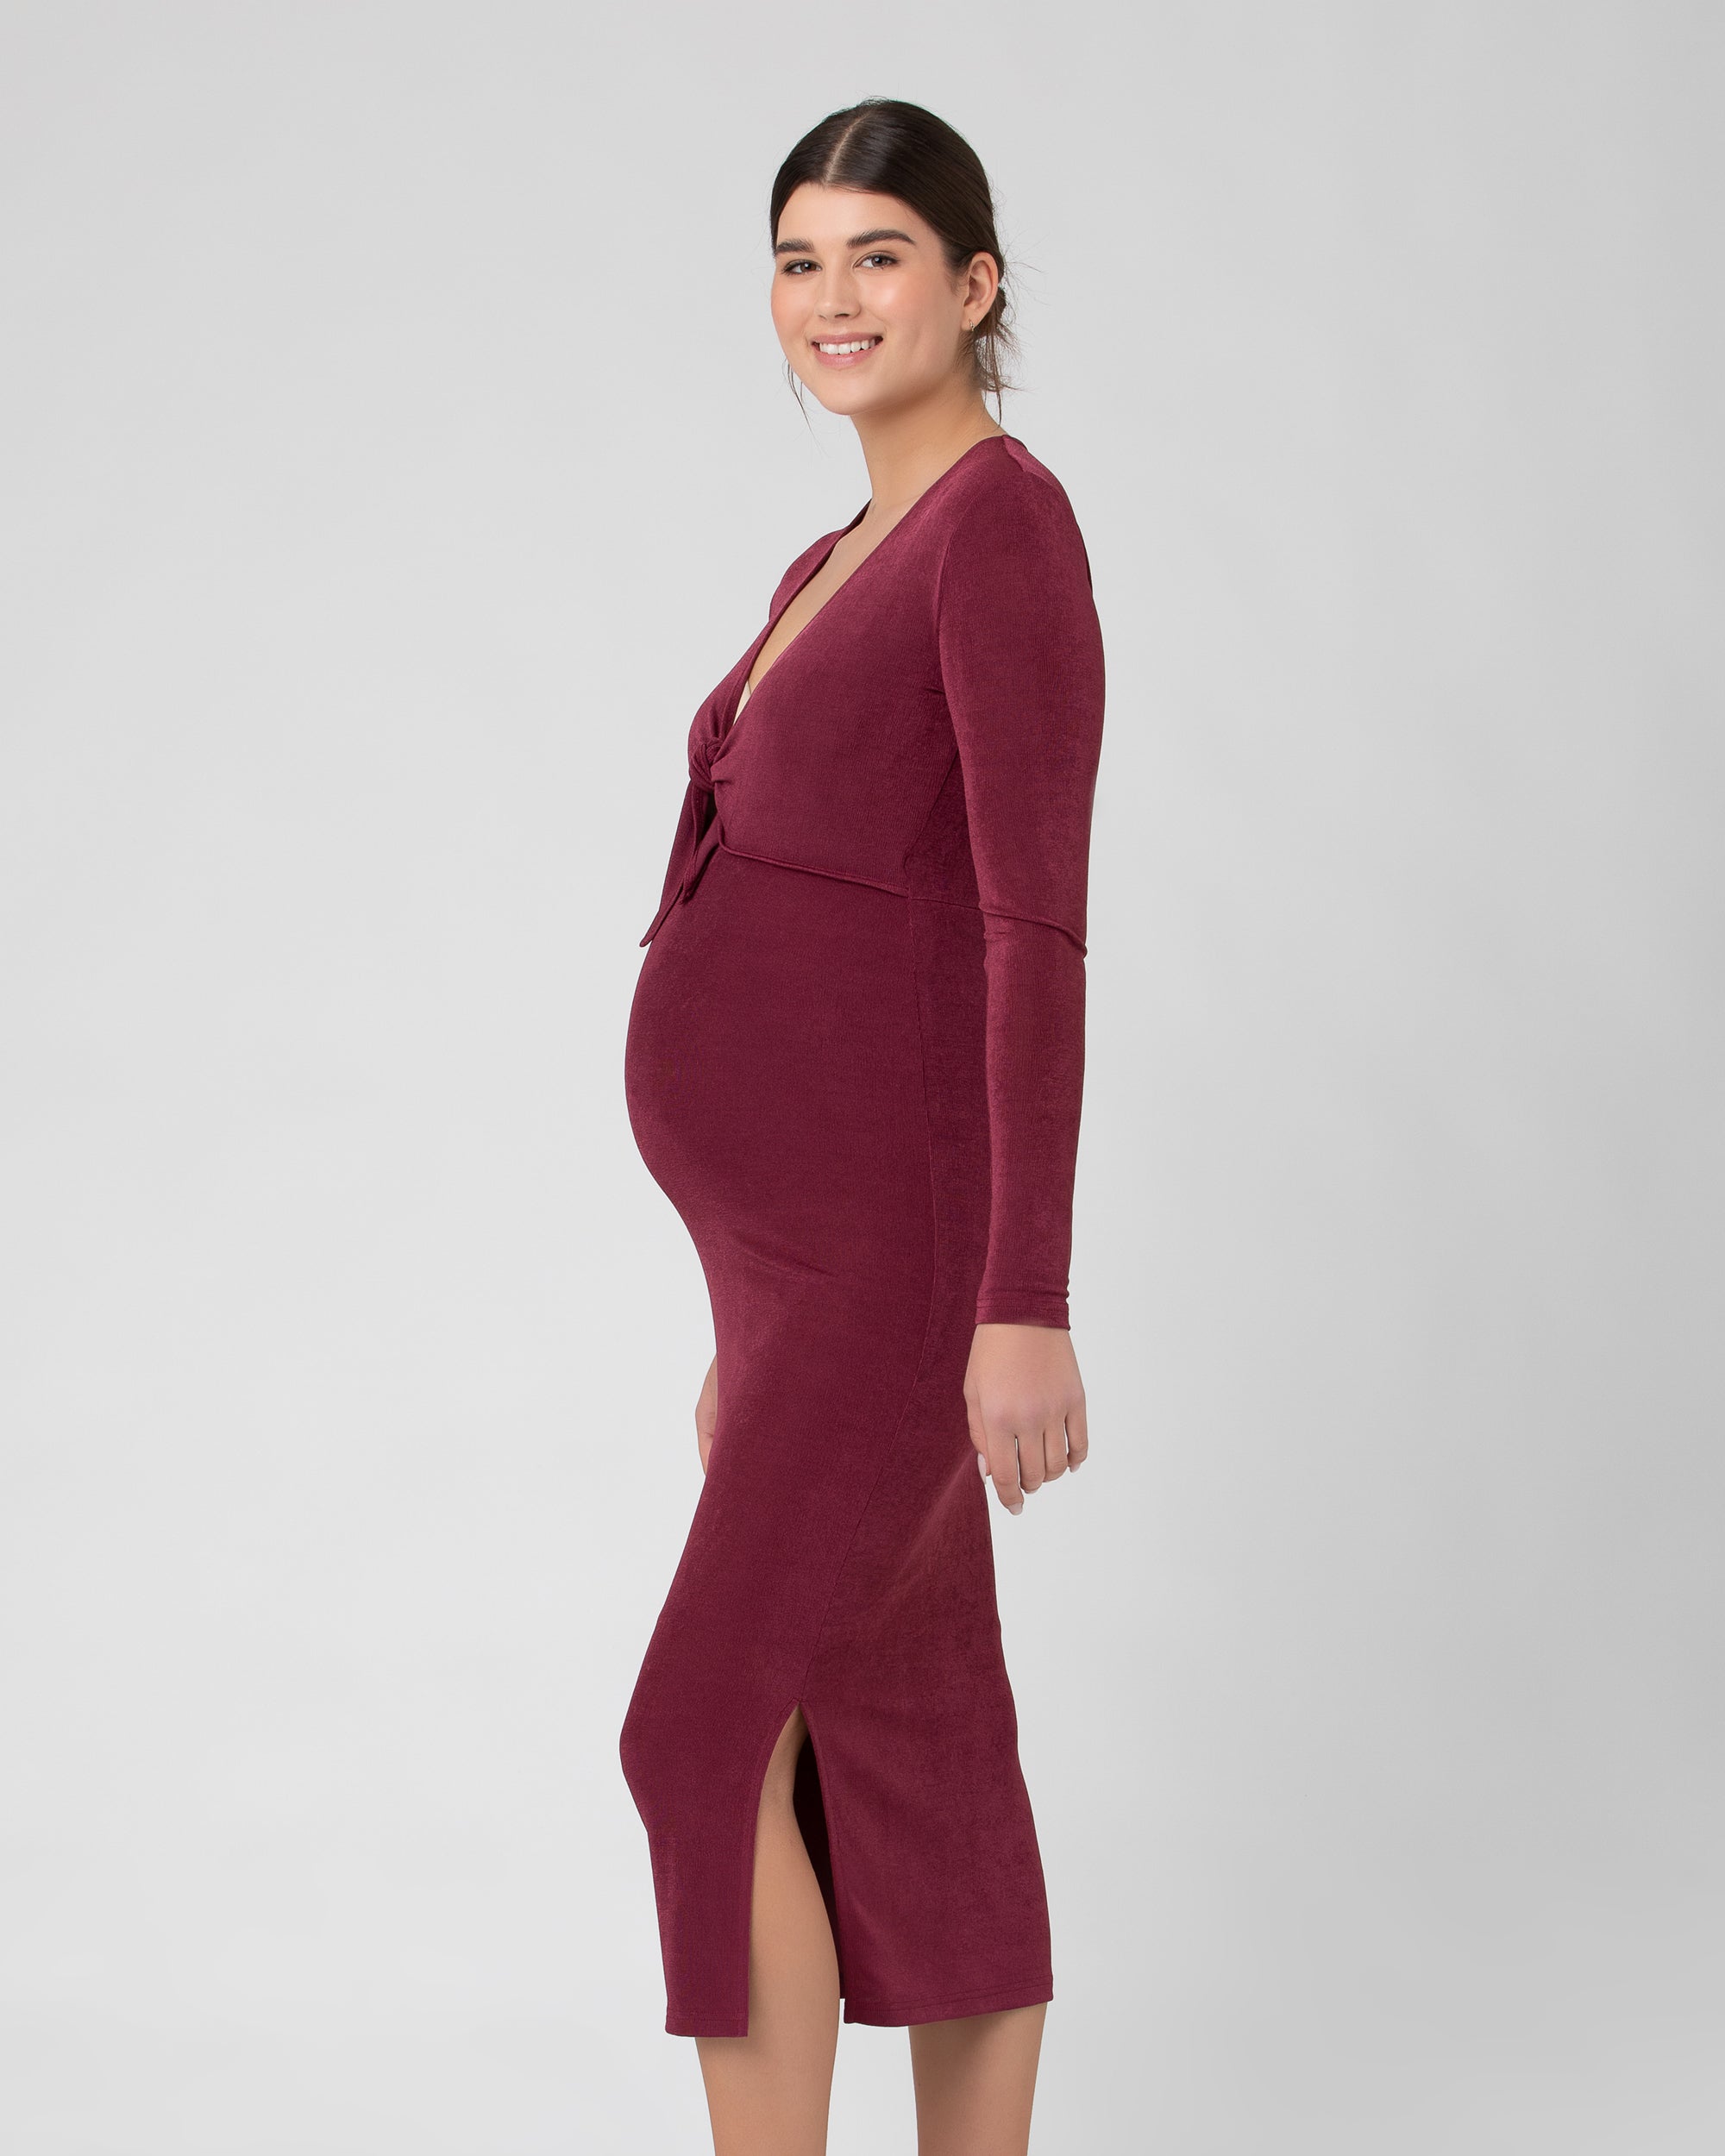 Smallshow Ruffle Maternity Nursing Dress - Wine / Small